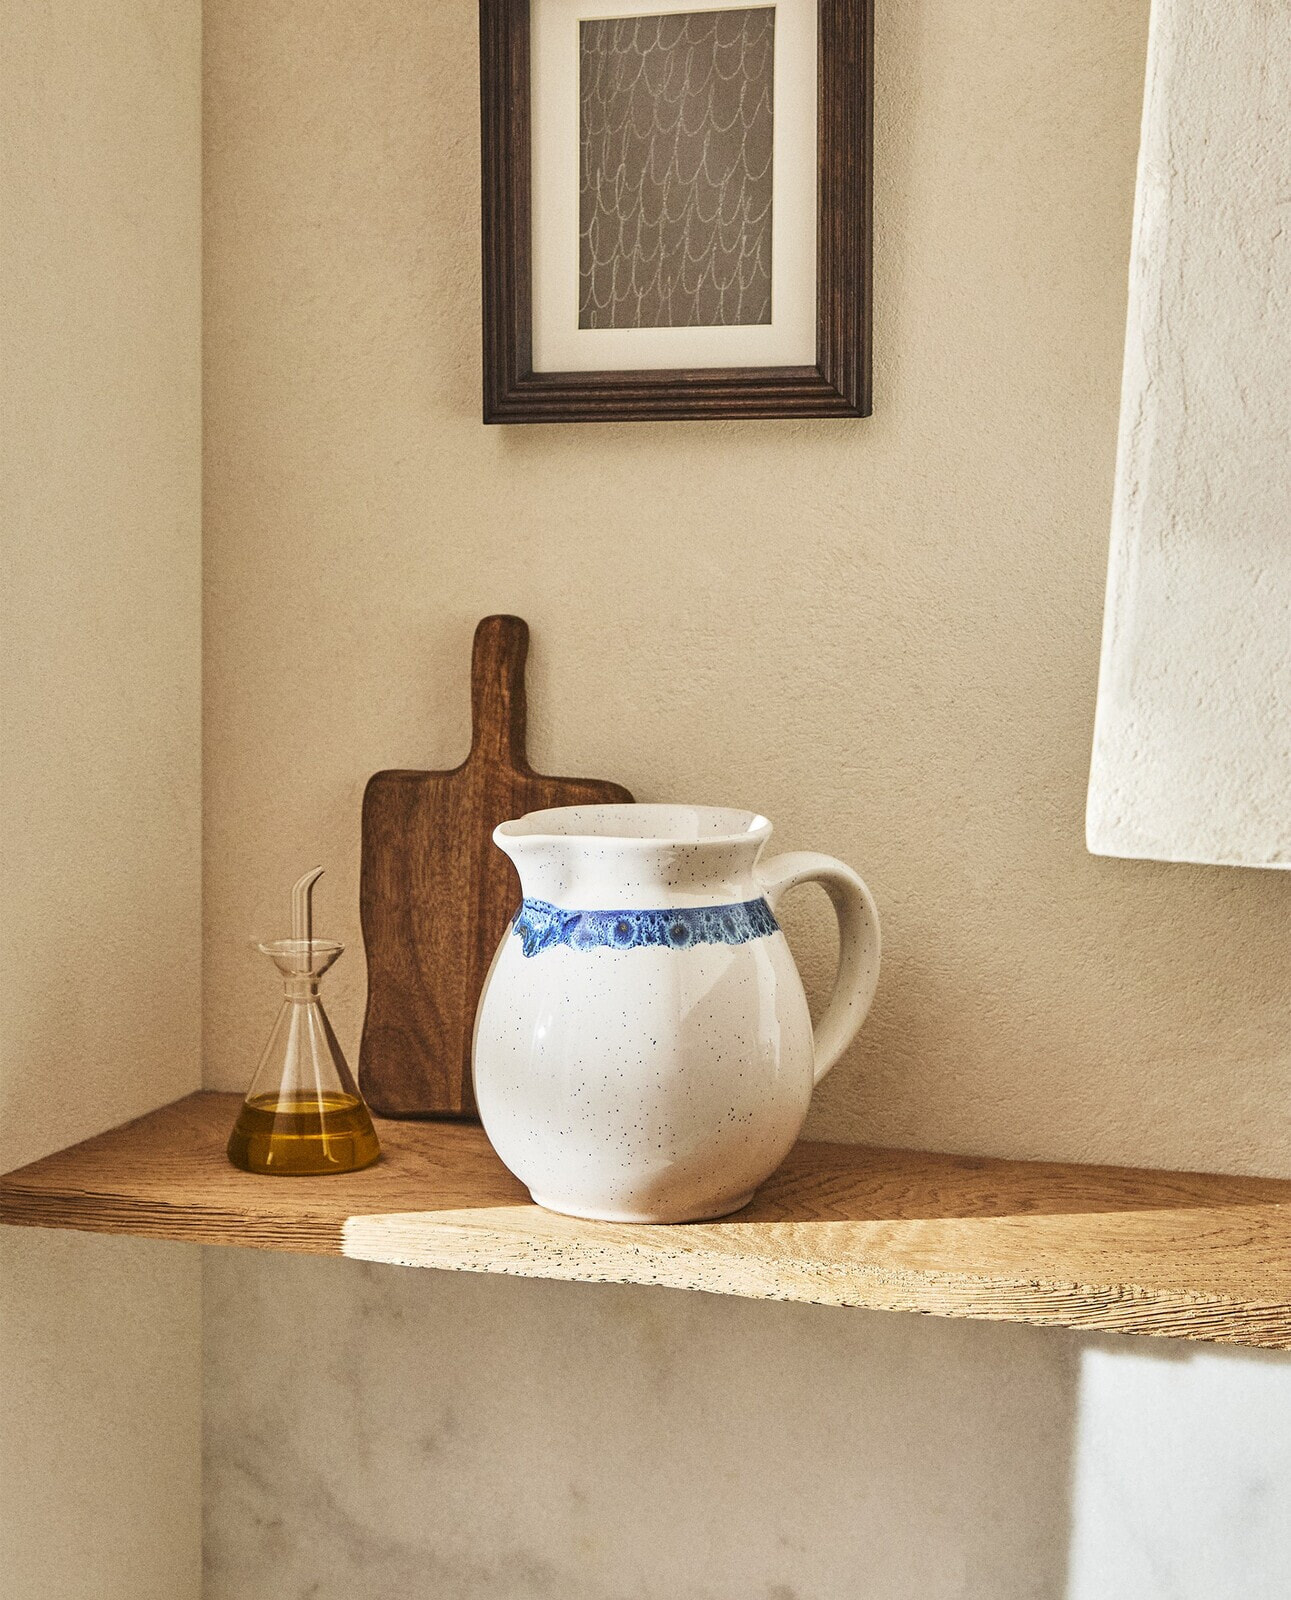 Earthenware jug with line design